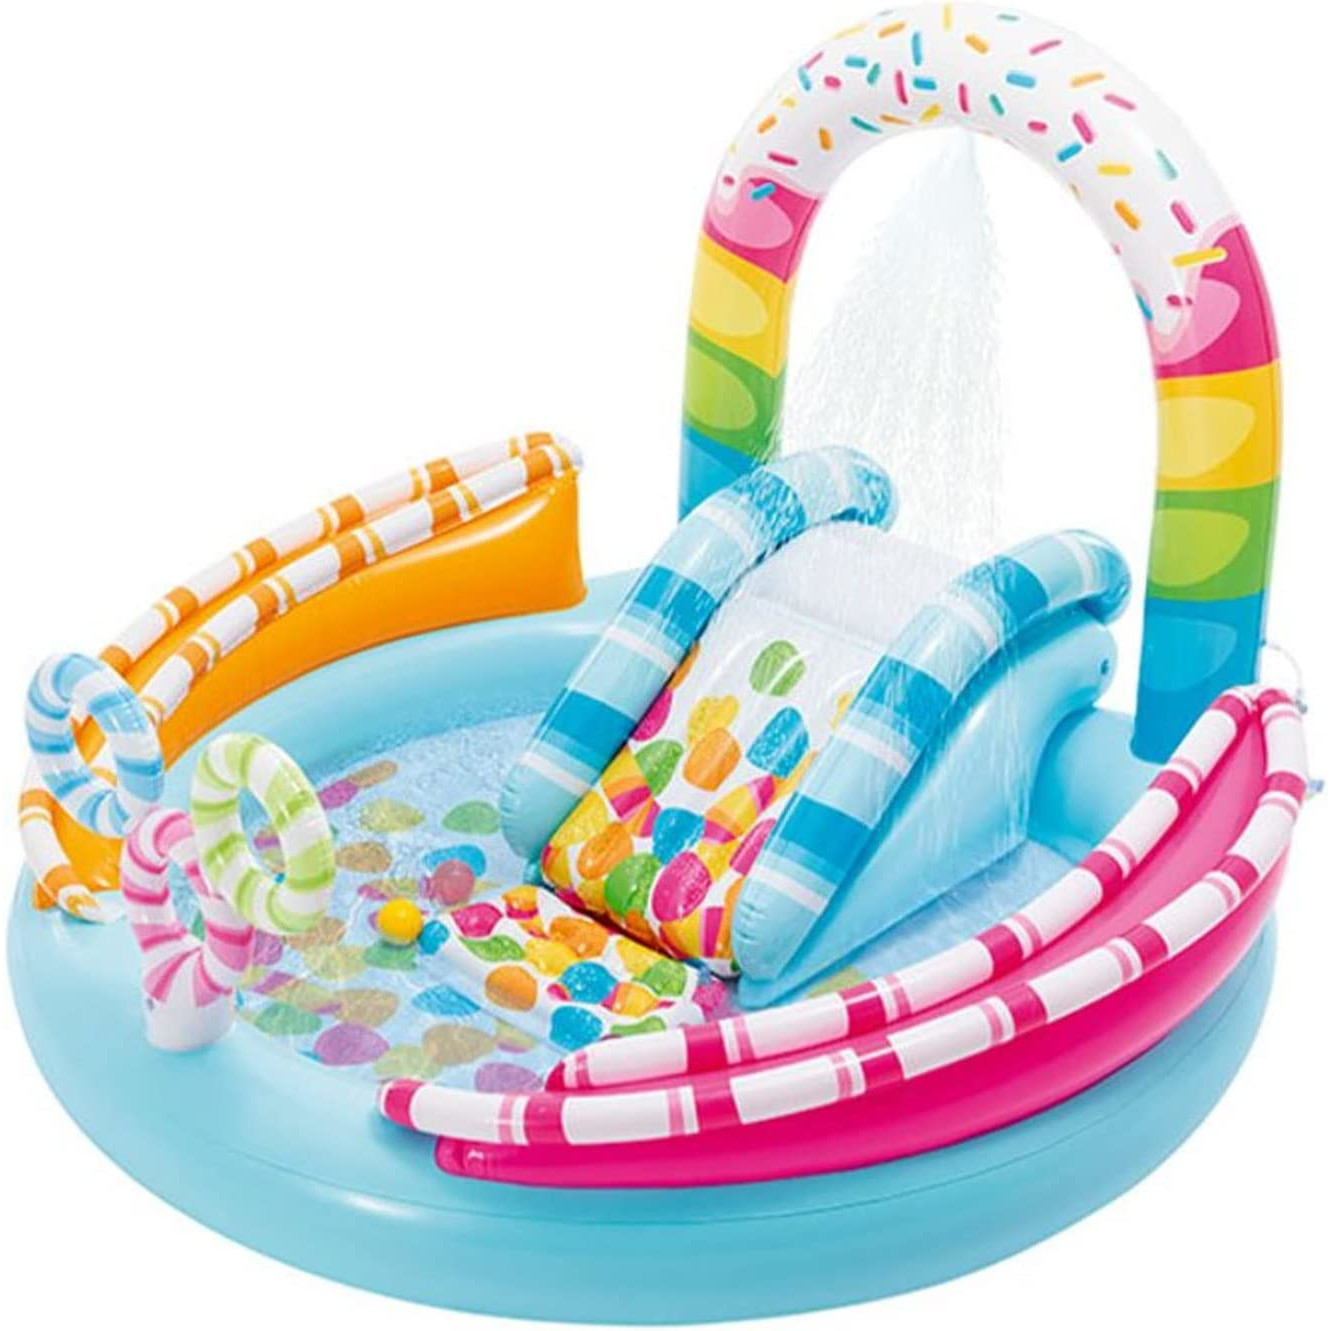 INTEX Playcenter - Candy Fun Playcenter, mehrfarbig (170x94x122cm)